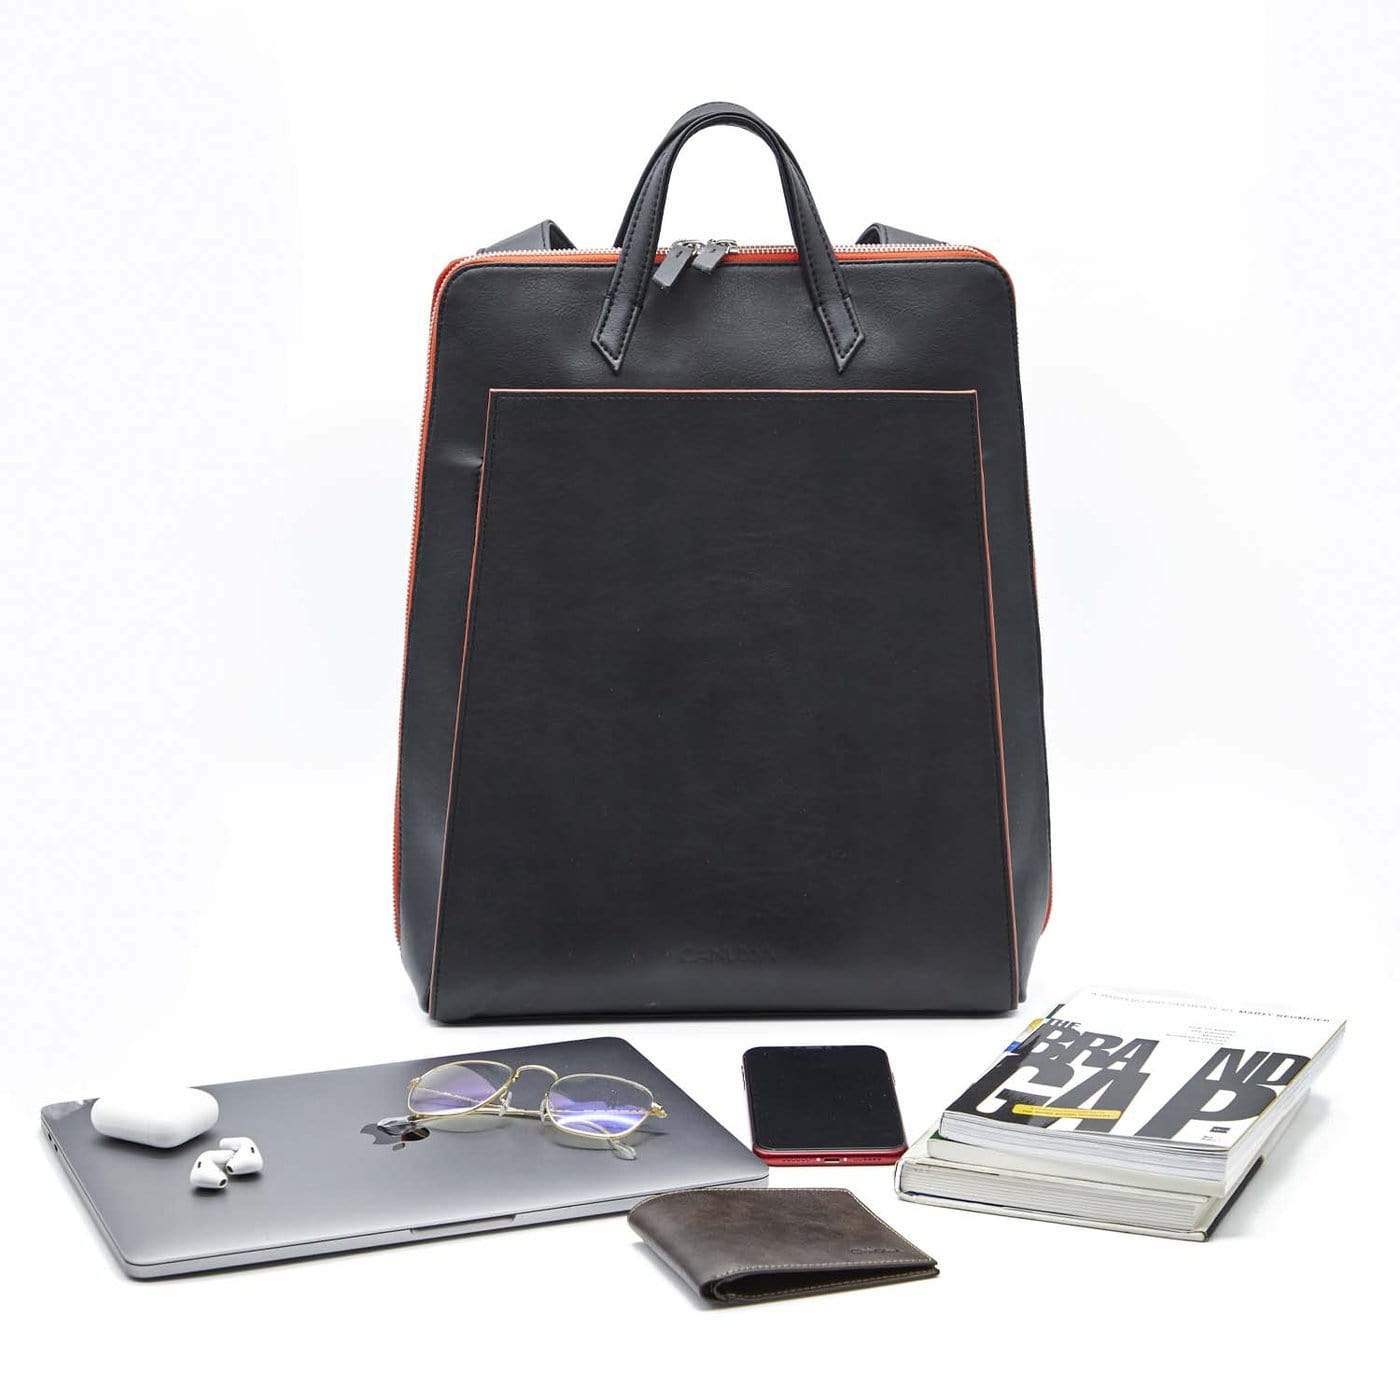 Canussa Urban Vegan Leather Backpack | Black & Red